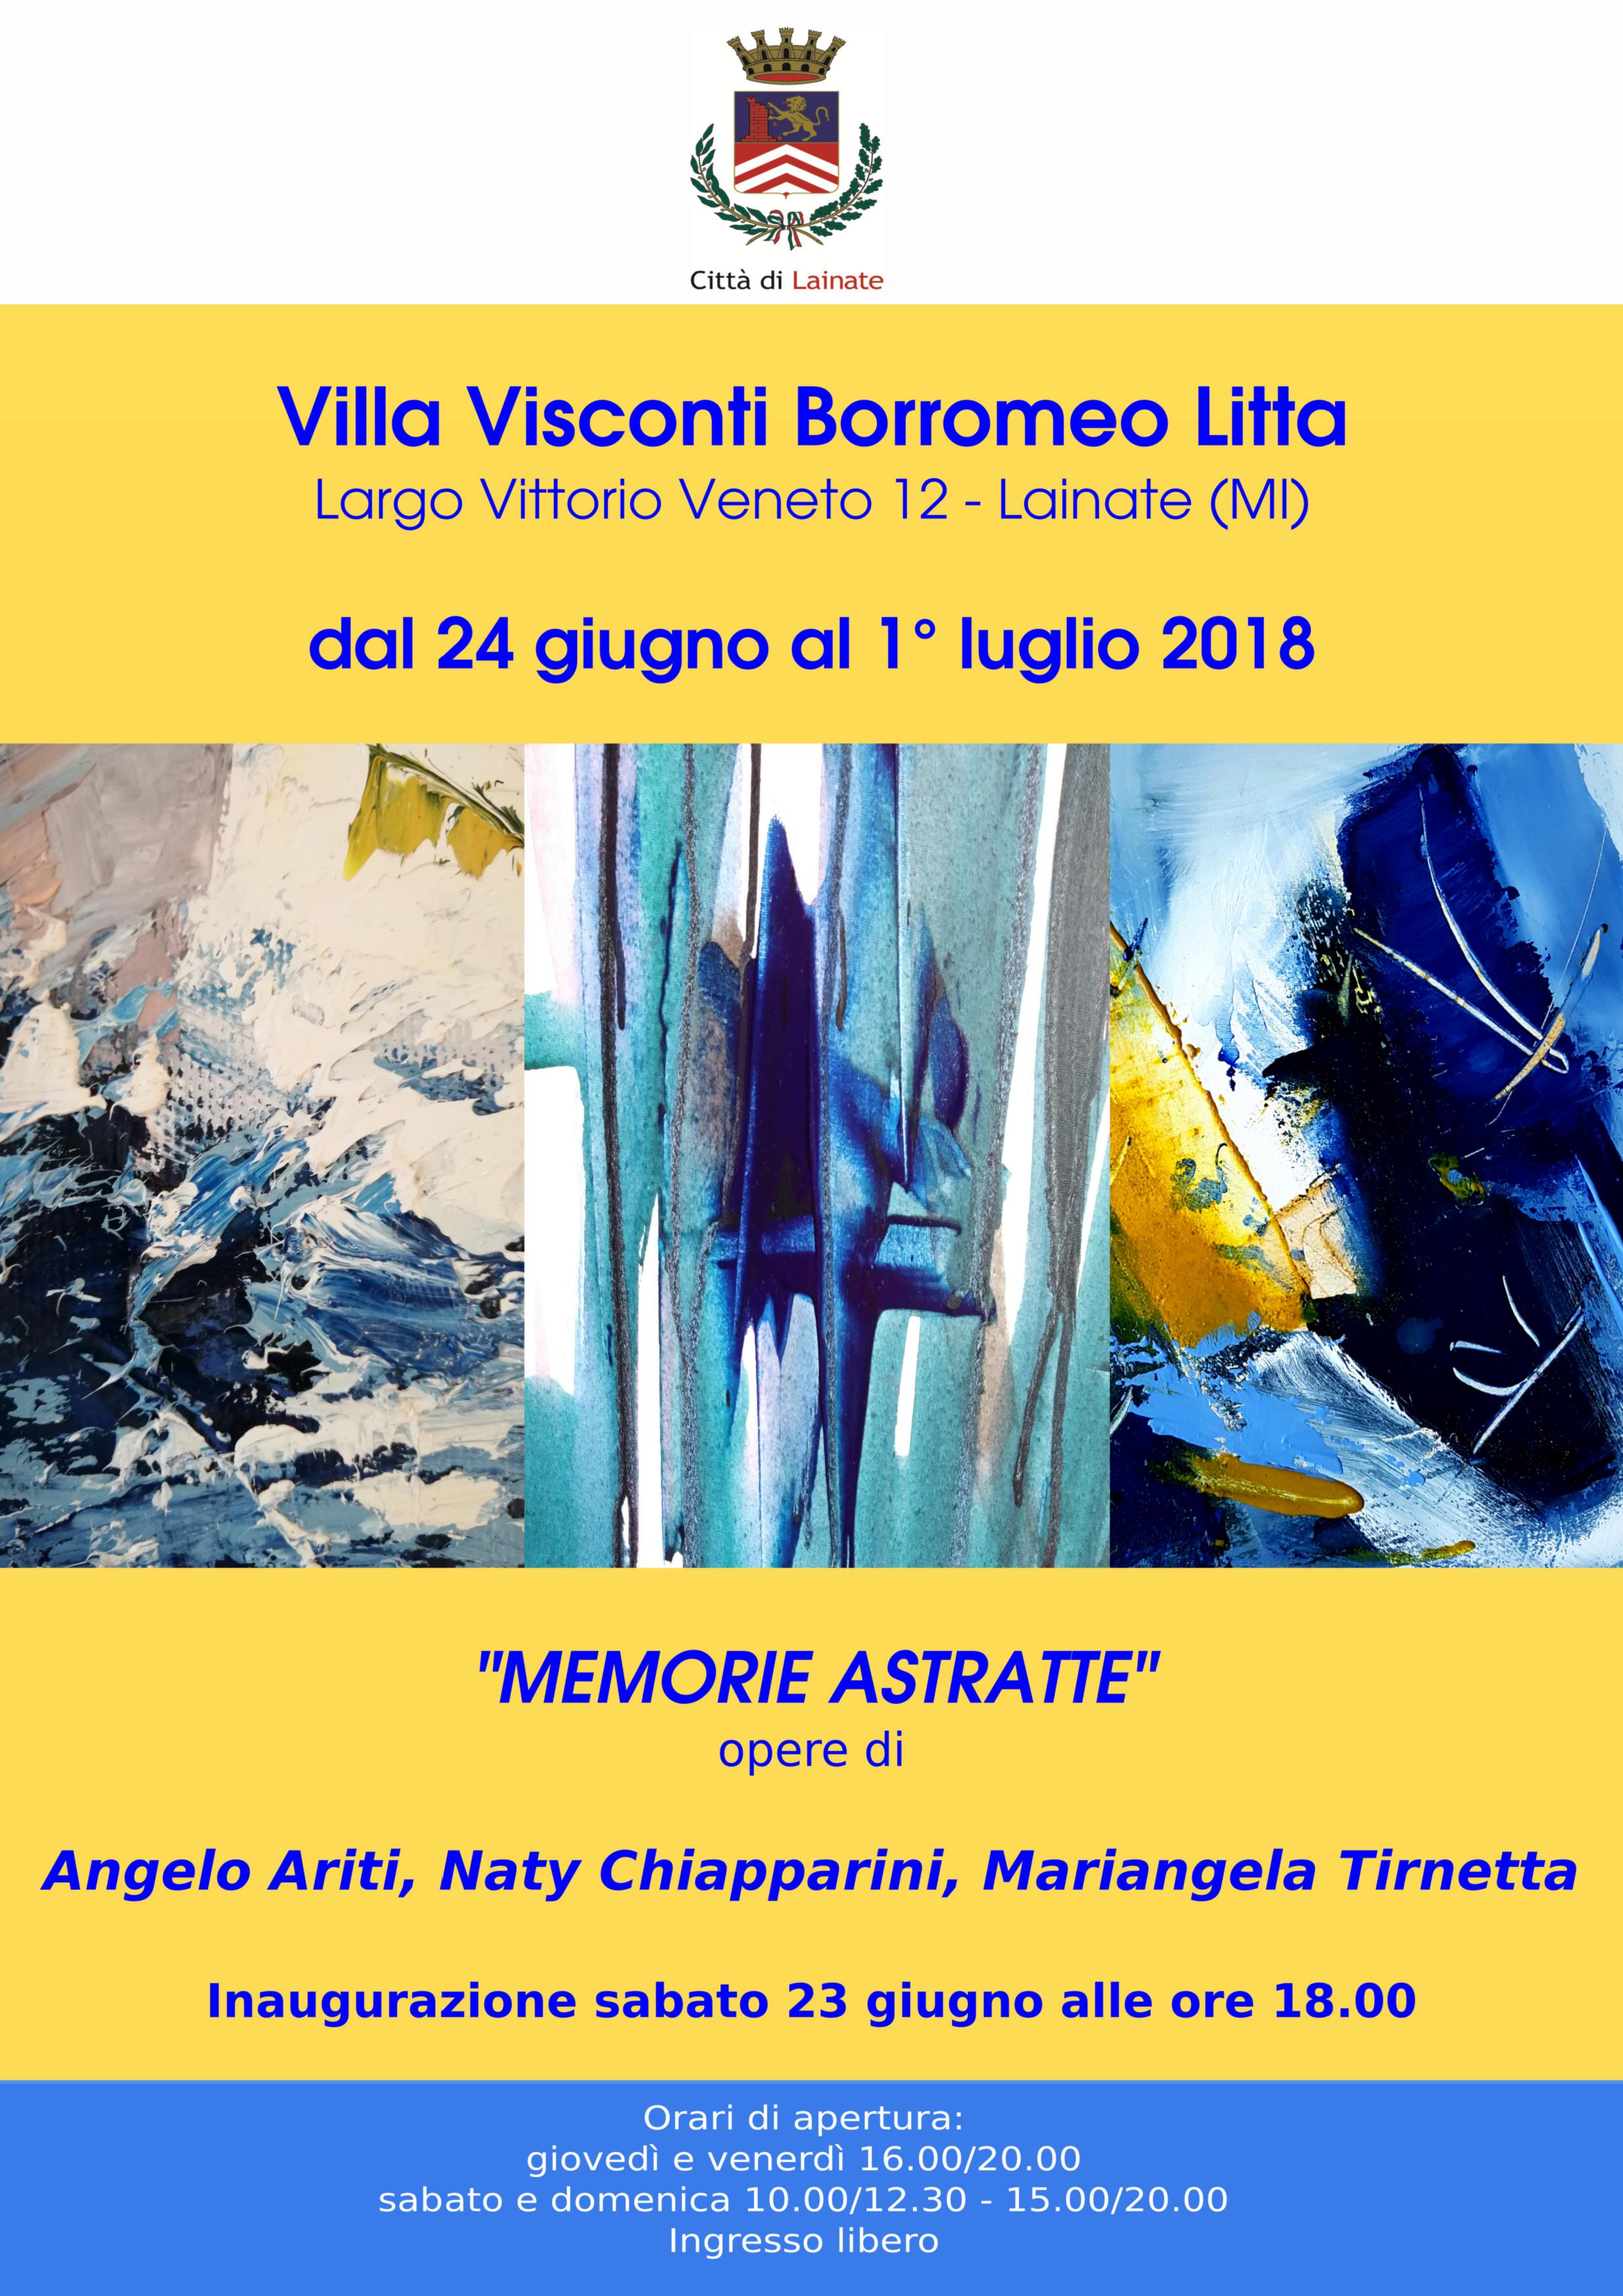  'Memorie astratte' di Angelo Ariti,  Naty Chiapparini, Mariangela Tirnetta